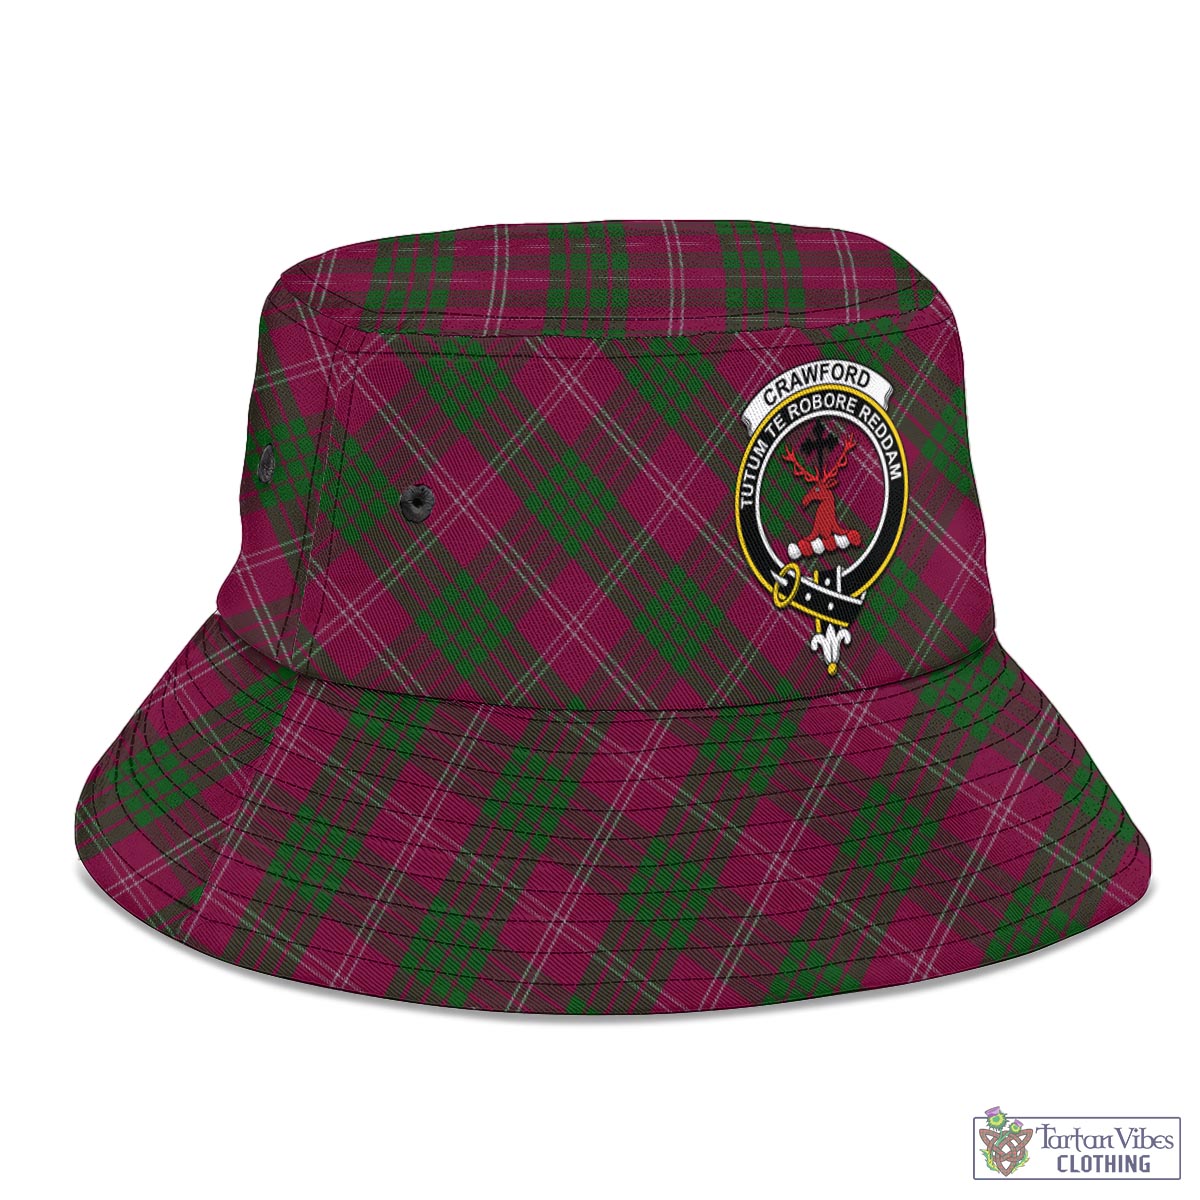 Tartan Vibes Clothing Crawford Tartan Bucket Hat with Family Crest